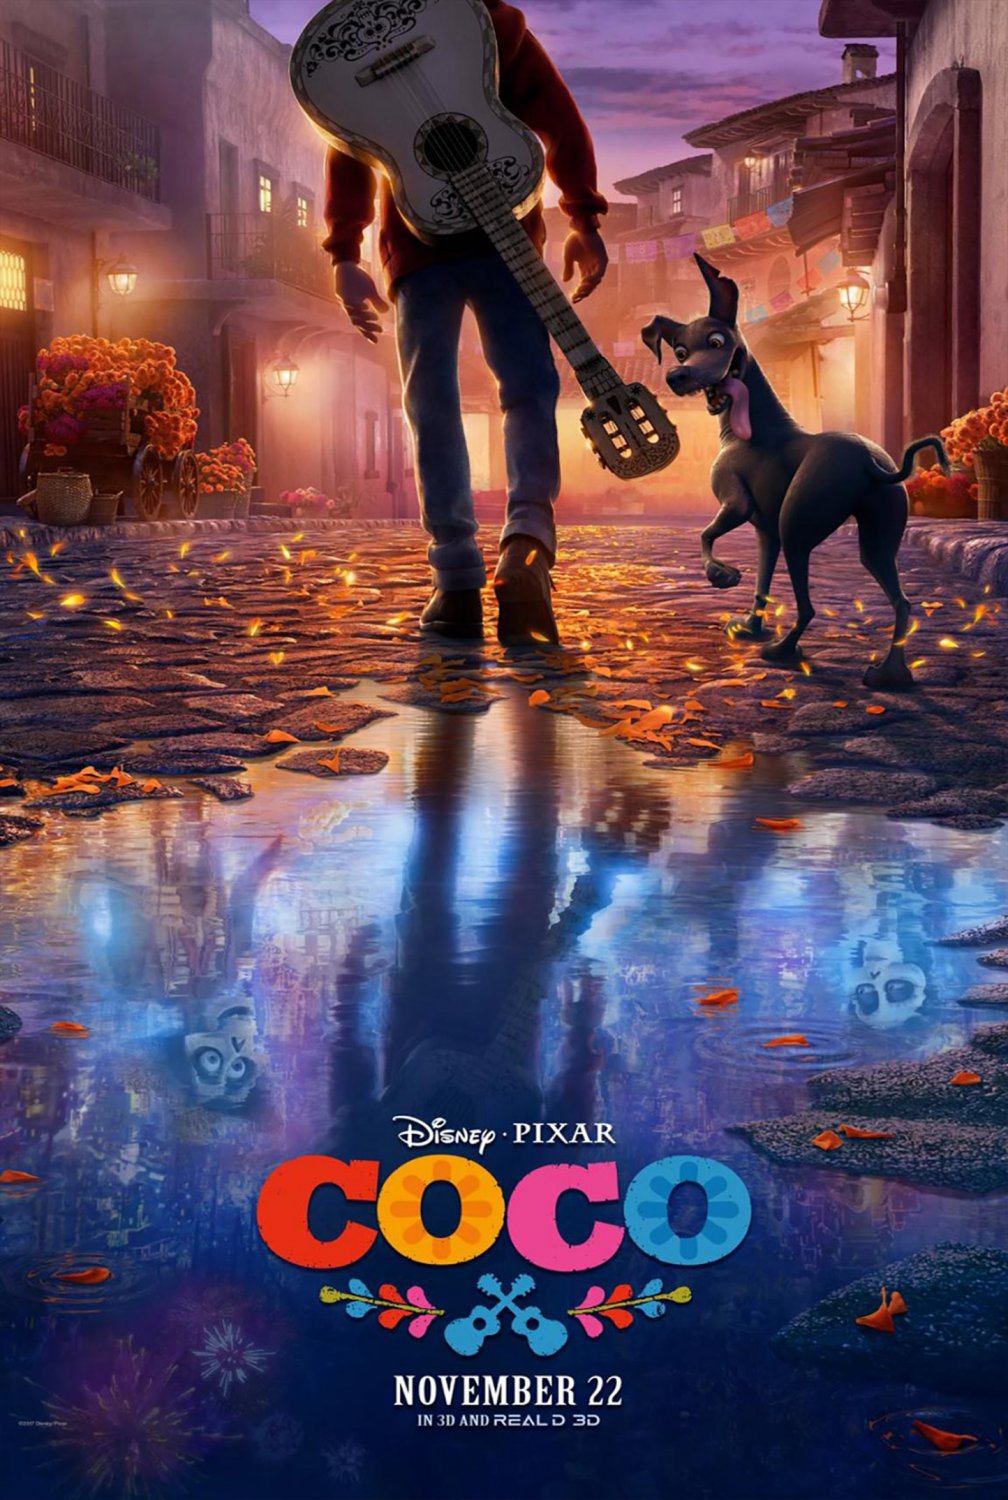 Coco Movie  13"x19" (32cm/49cm) Poster